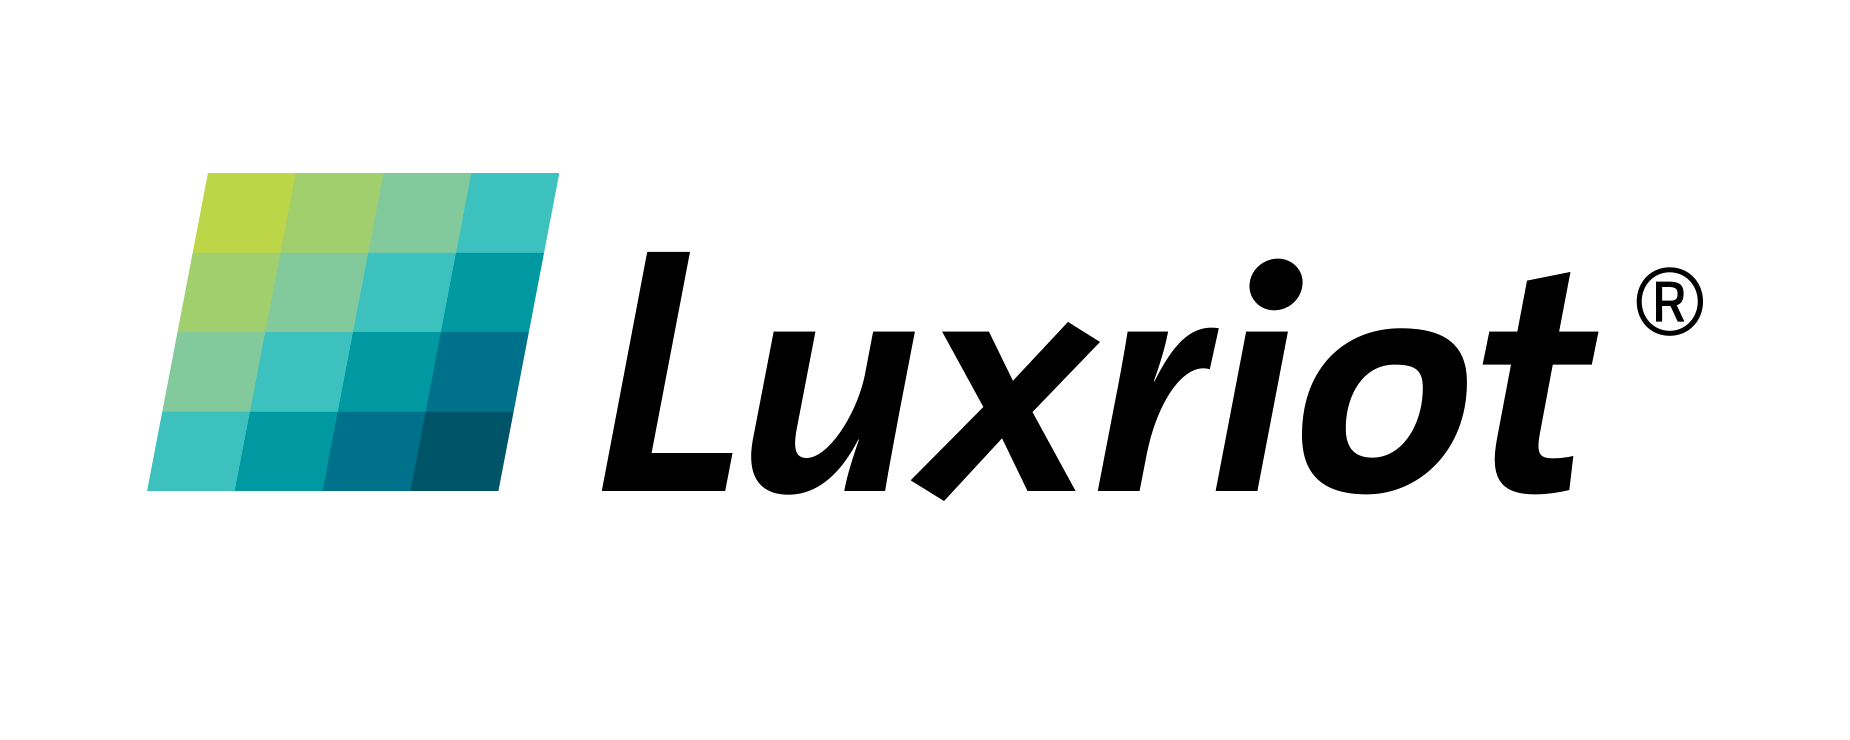 Luxriot